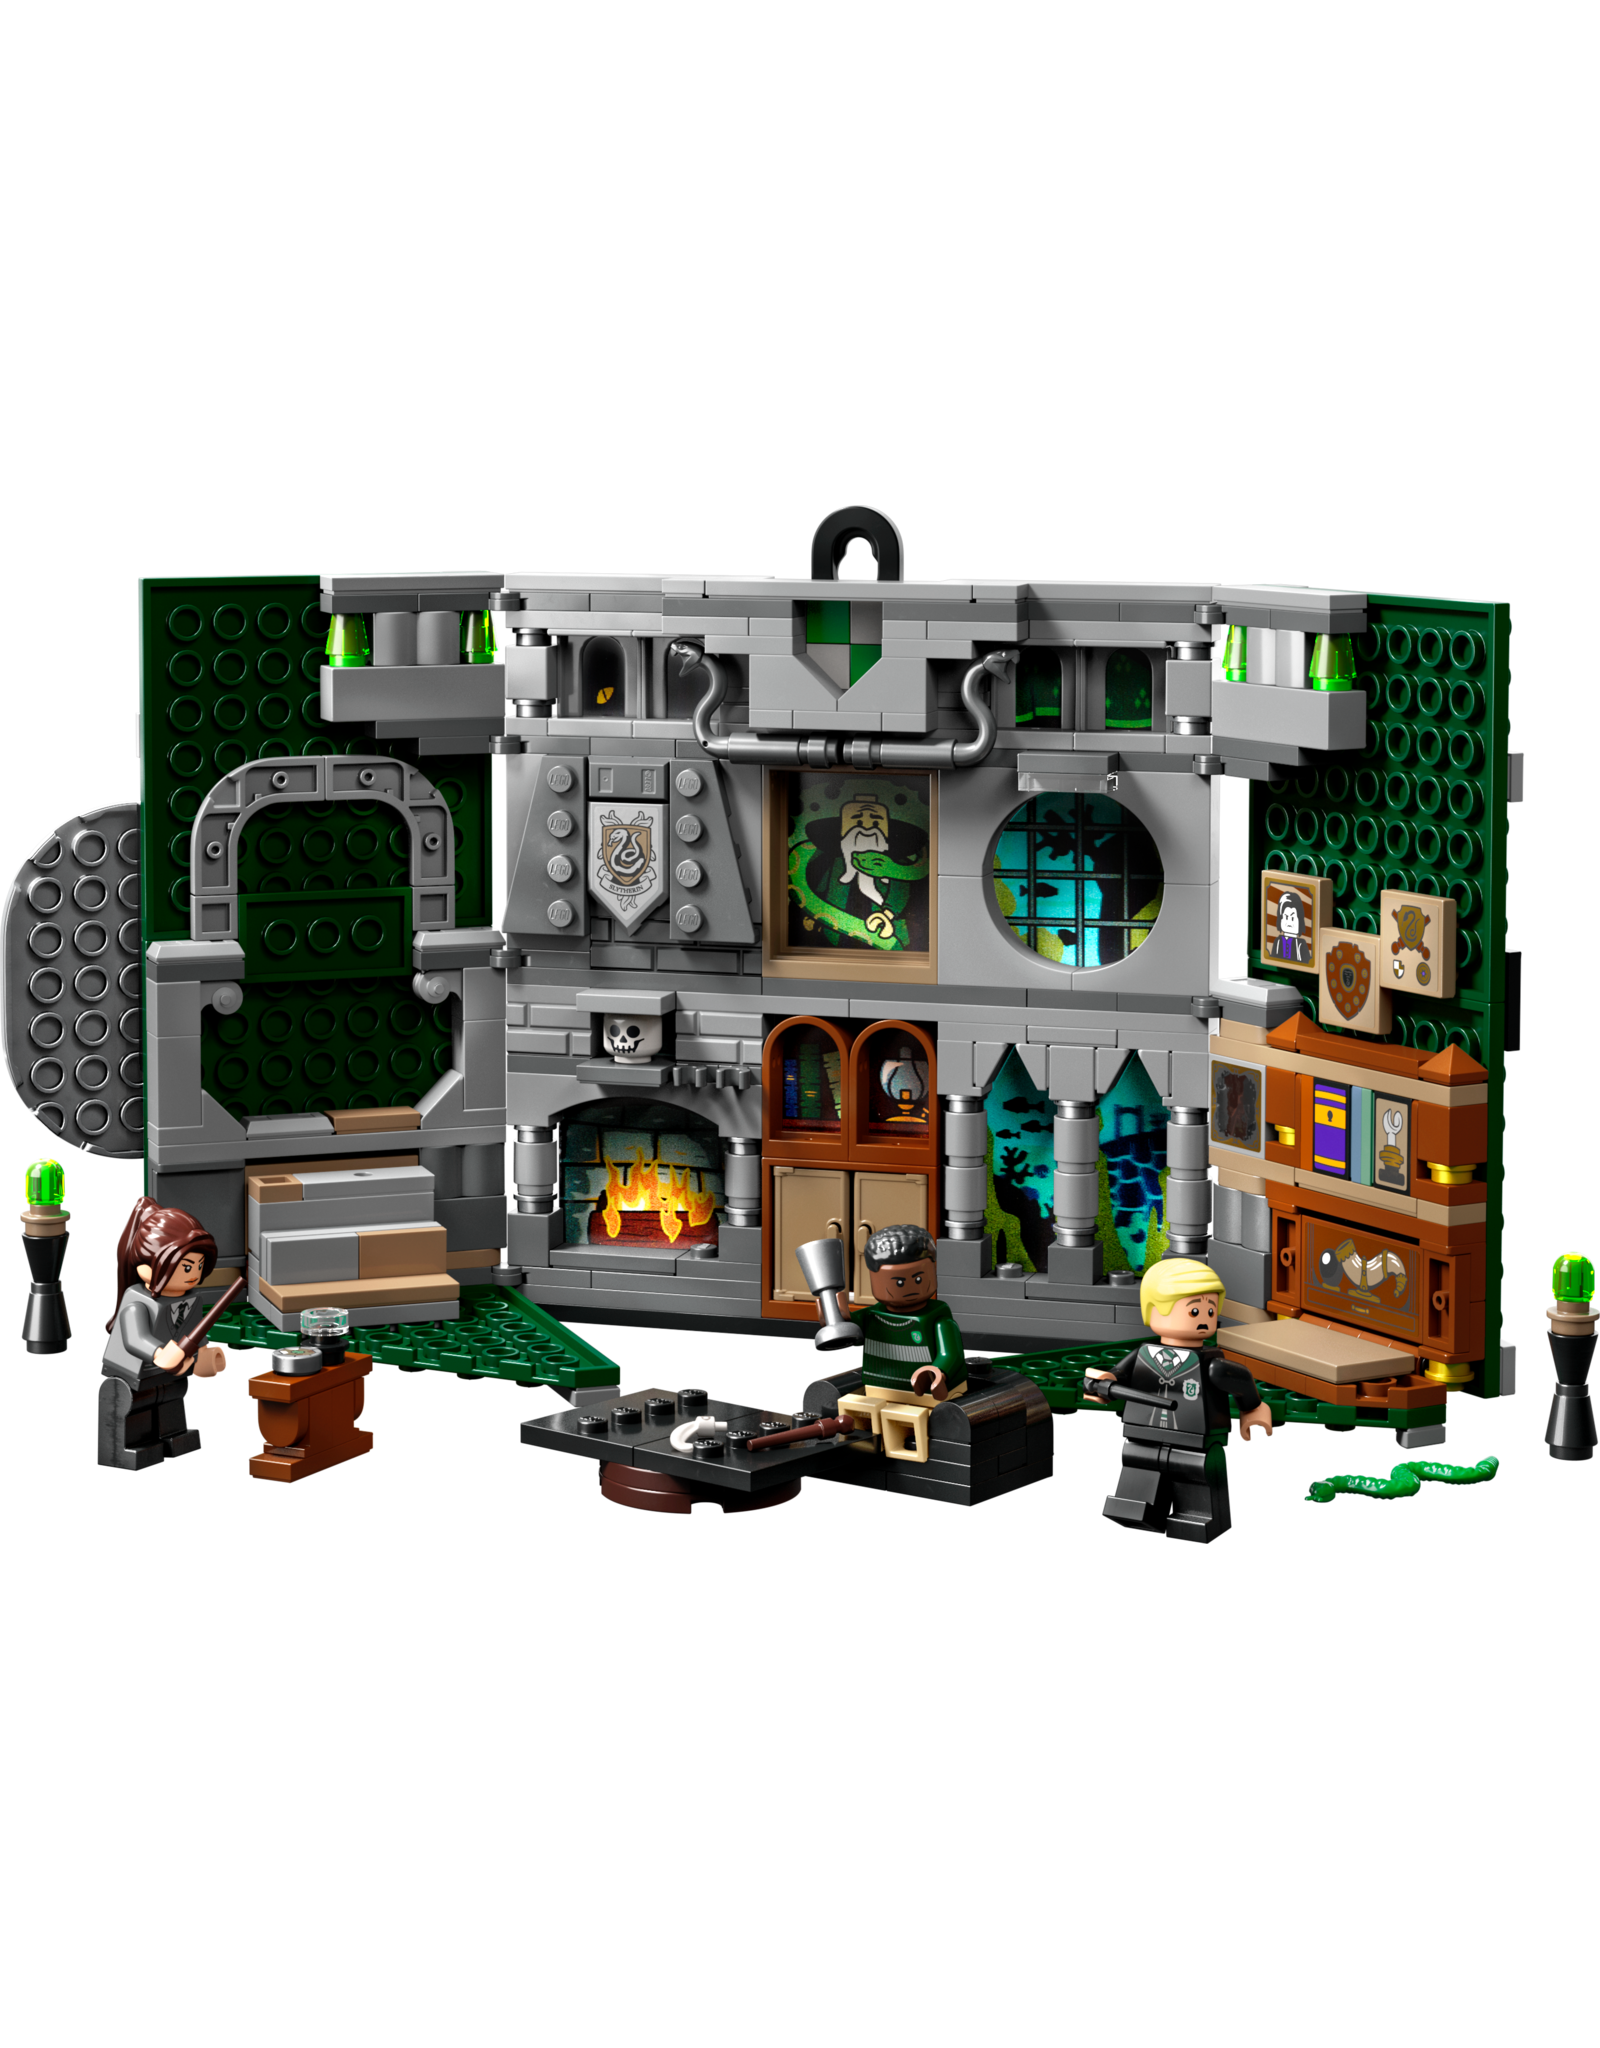 LEGO Harry Potter 76410 Slytherin House Banner